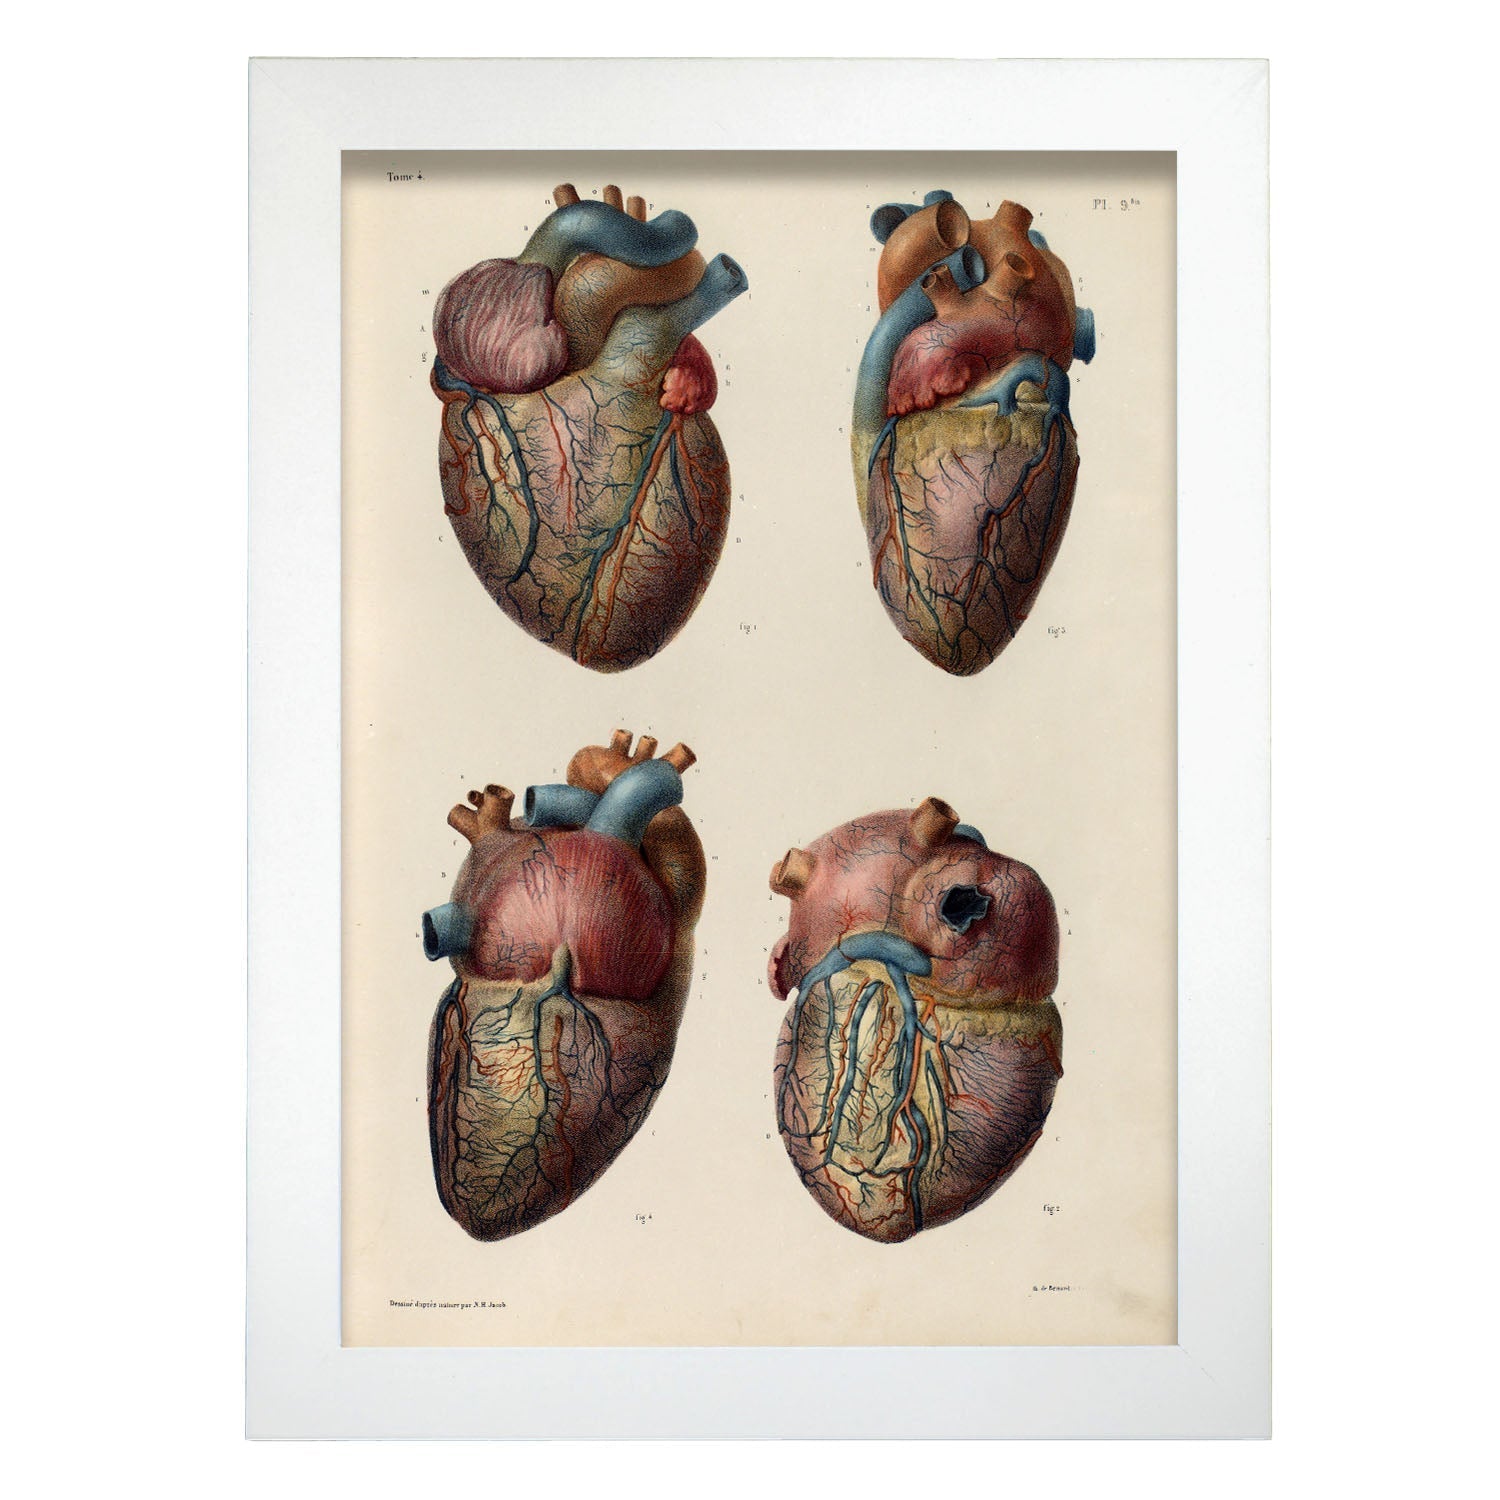 Heart and coronary arteries and veins-Artwork-Nacnic-A4-Marco Blanco-Nacnic Estudio SL